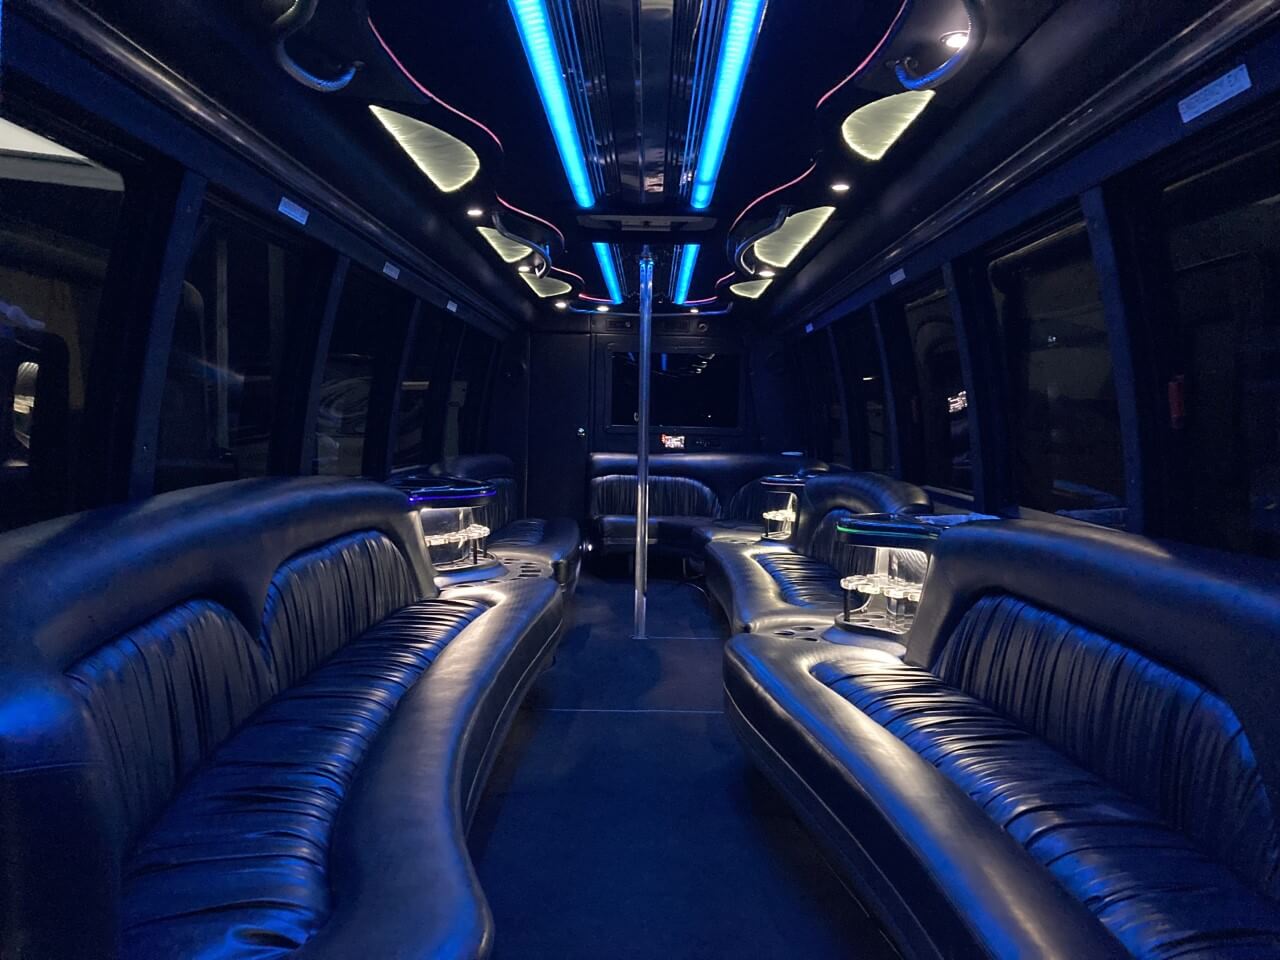 32 passenger party bus rental interior 2